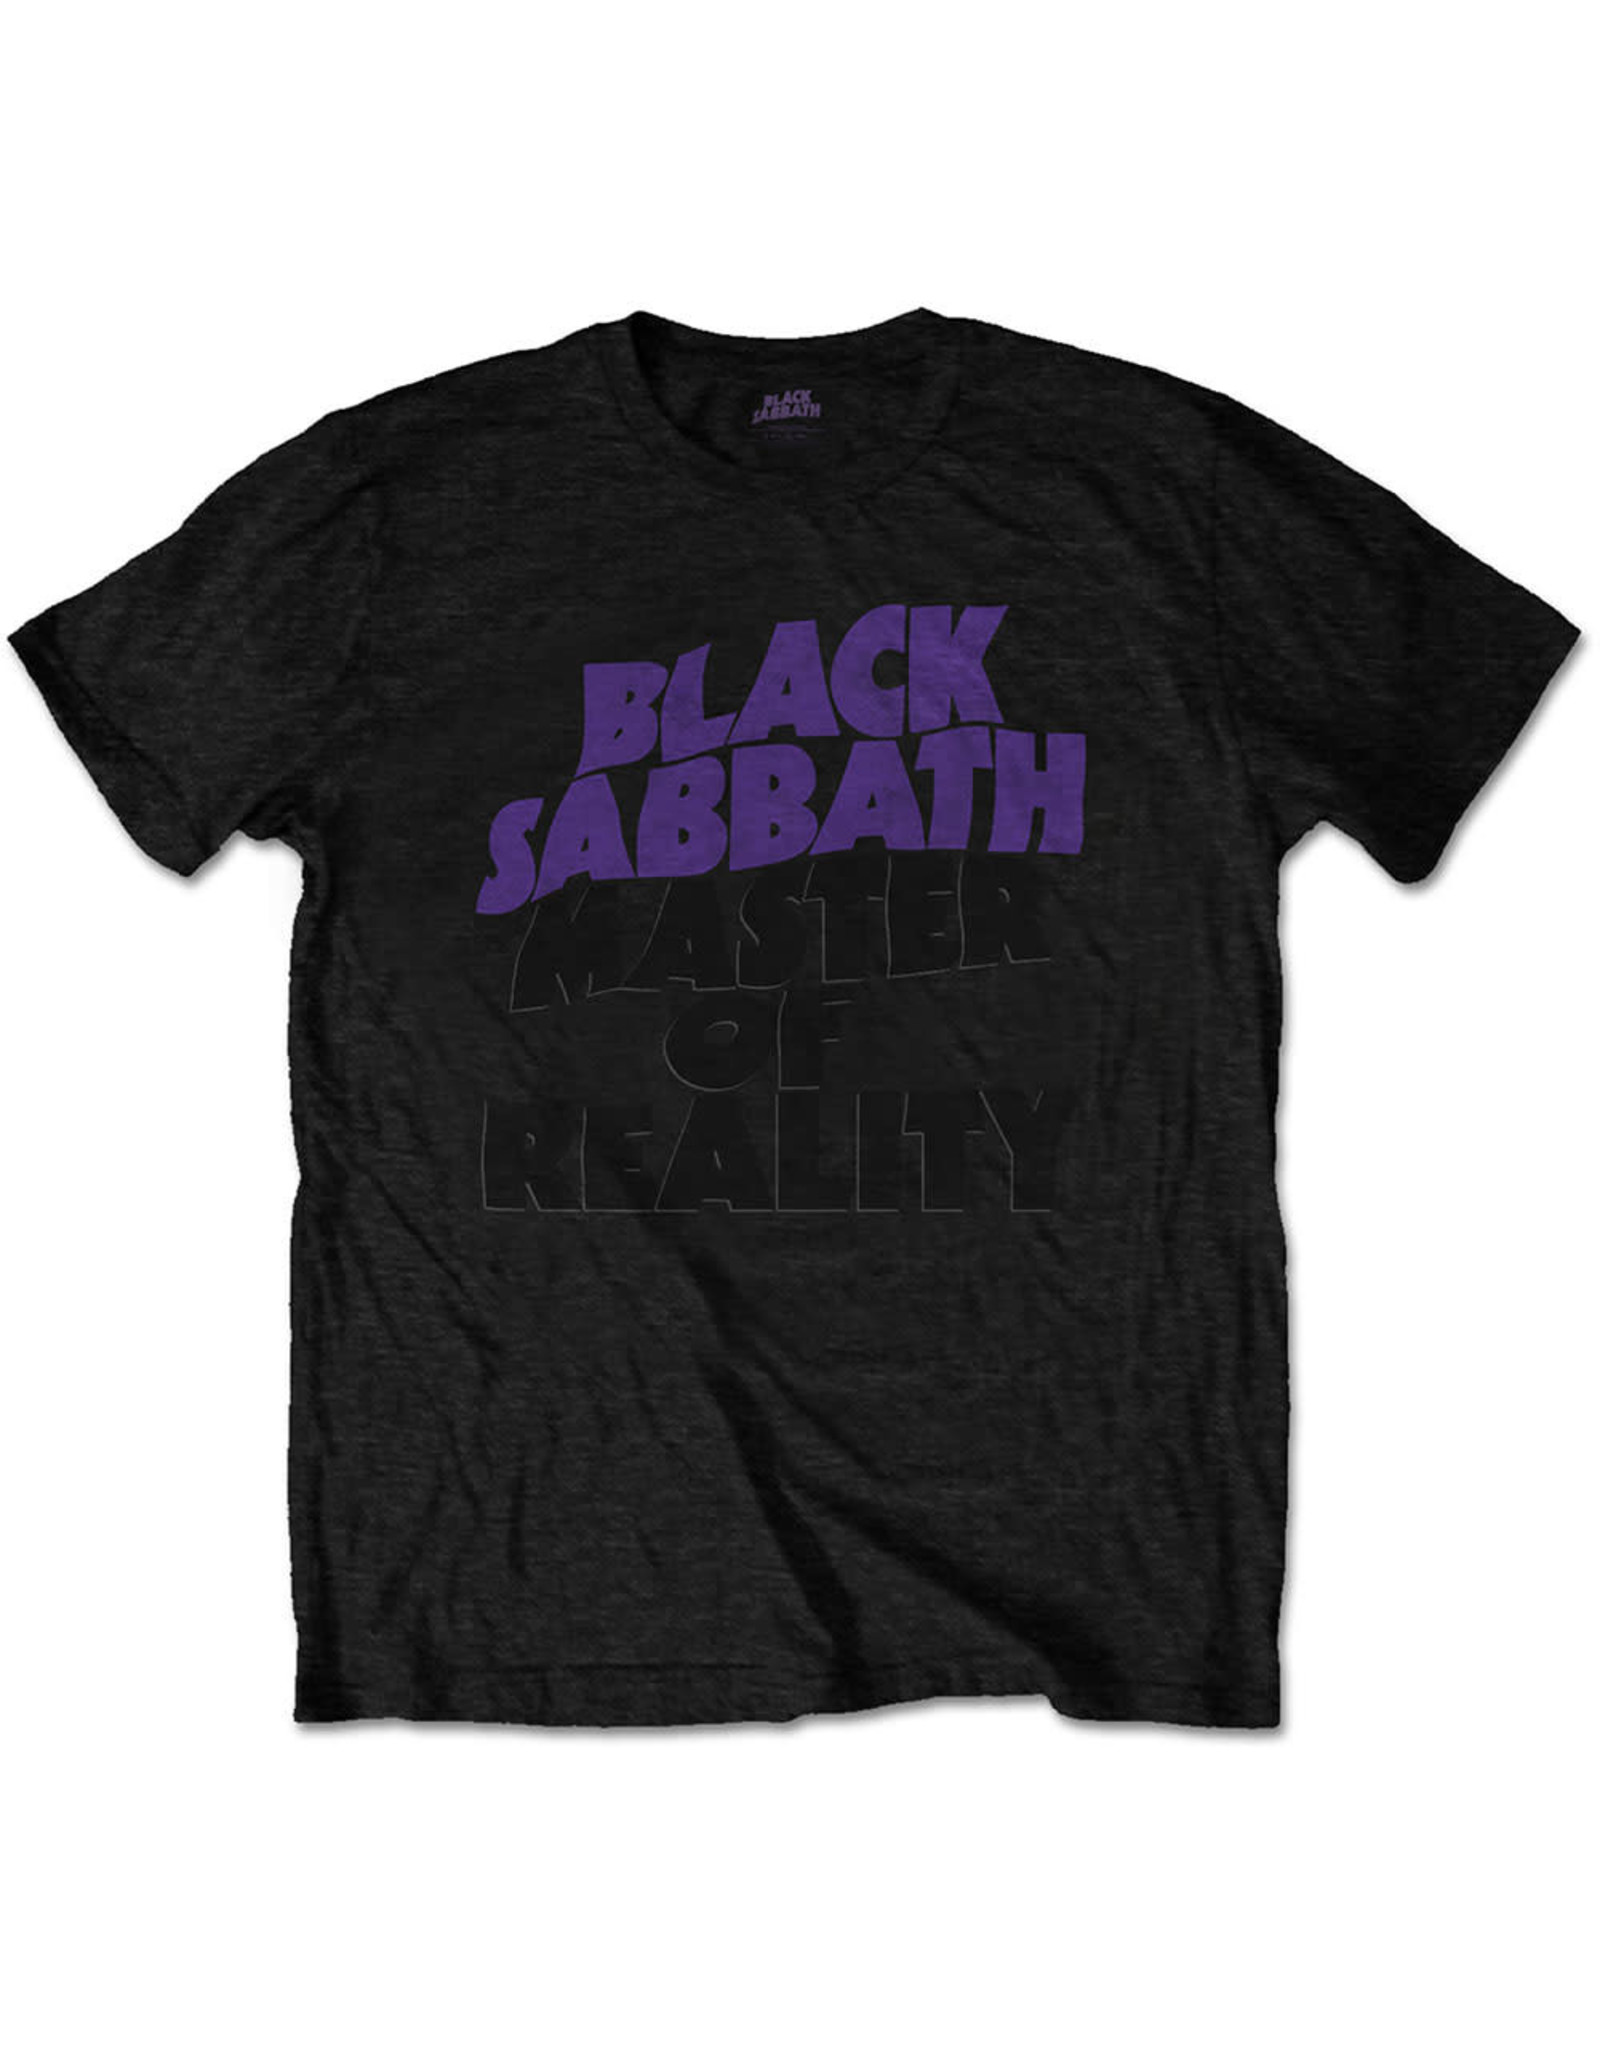 Black Sabbath - Master Of Reality Album T-Shirt - Pop Music